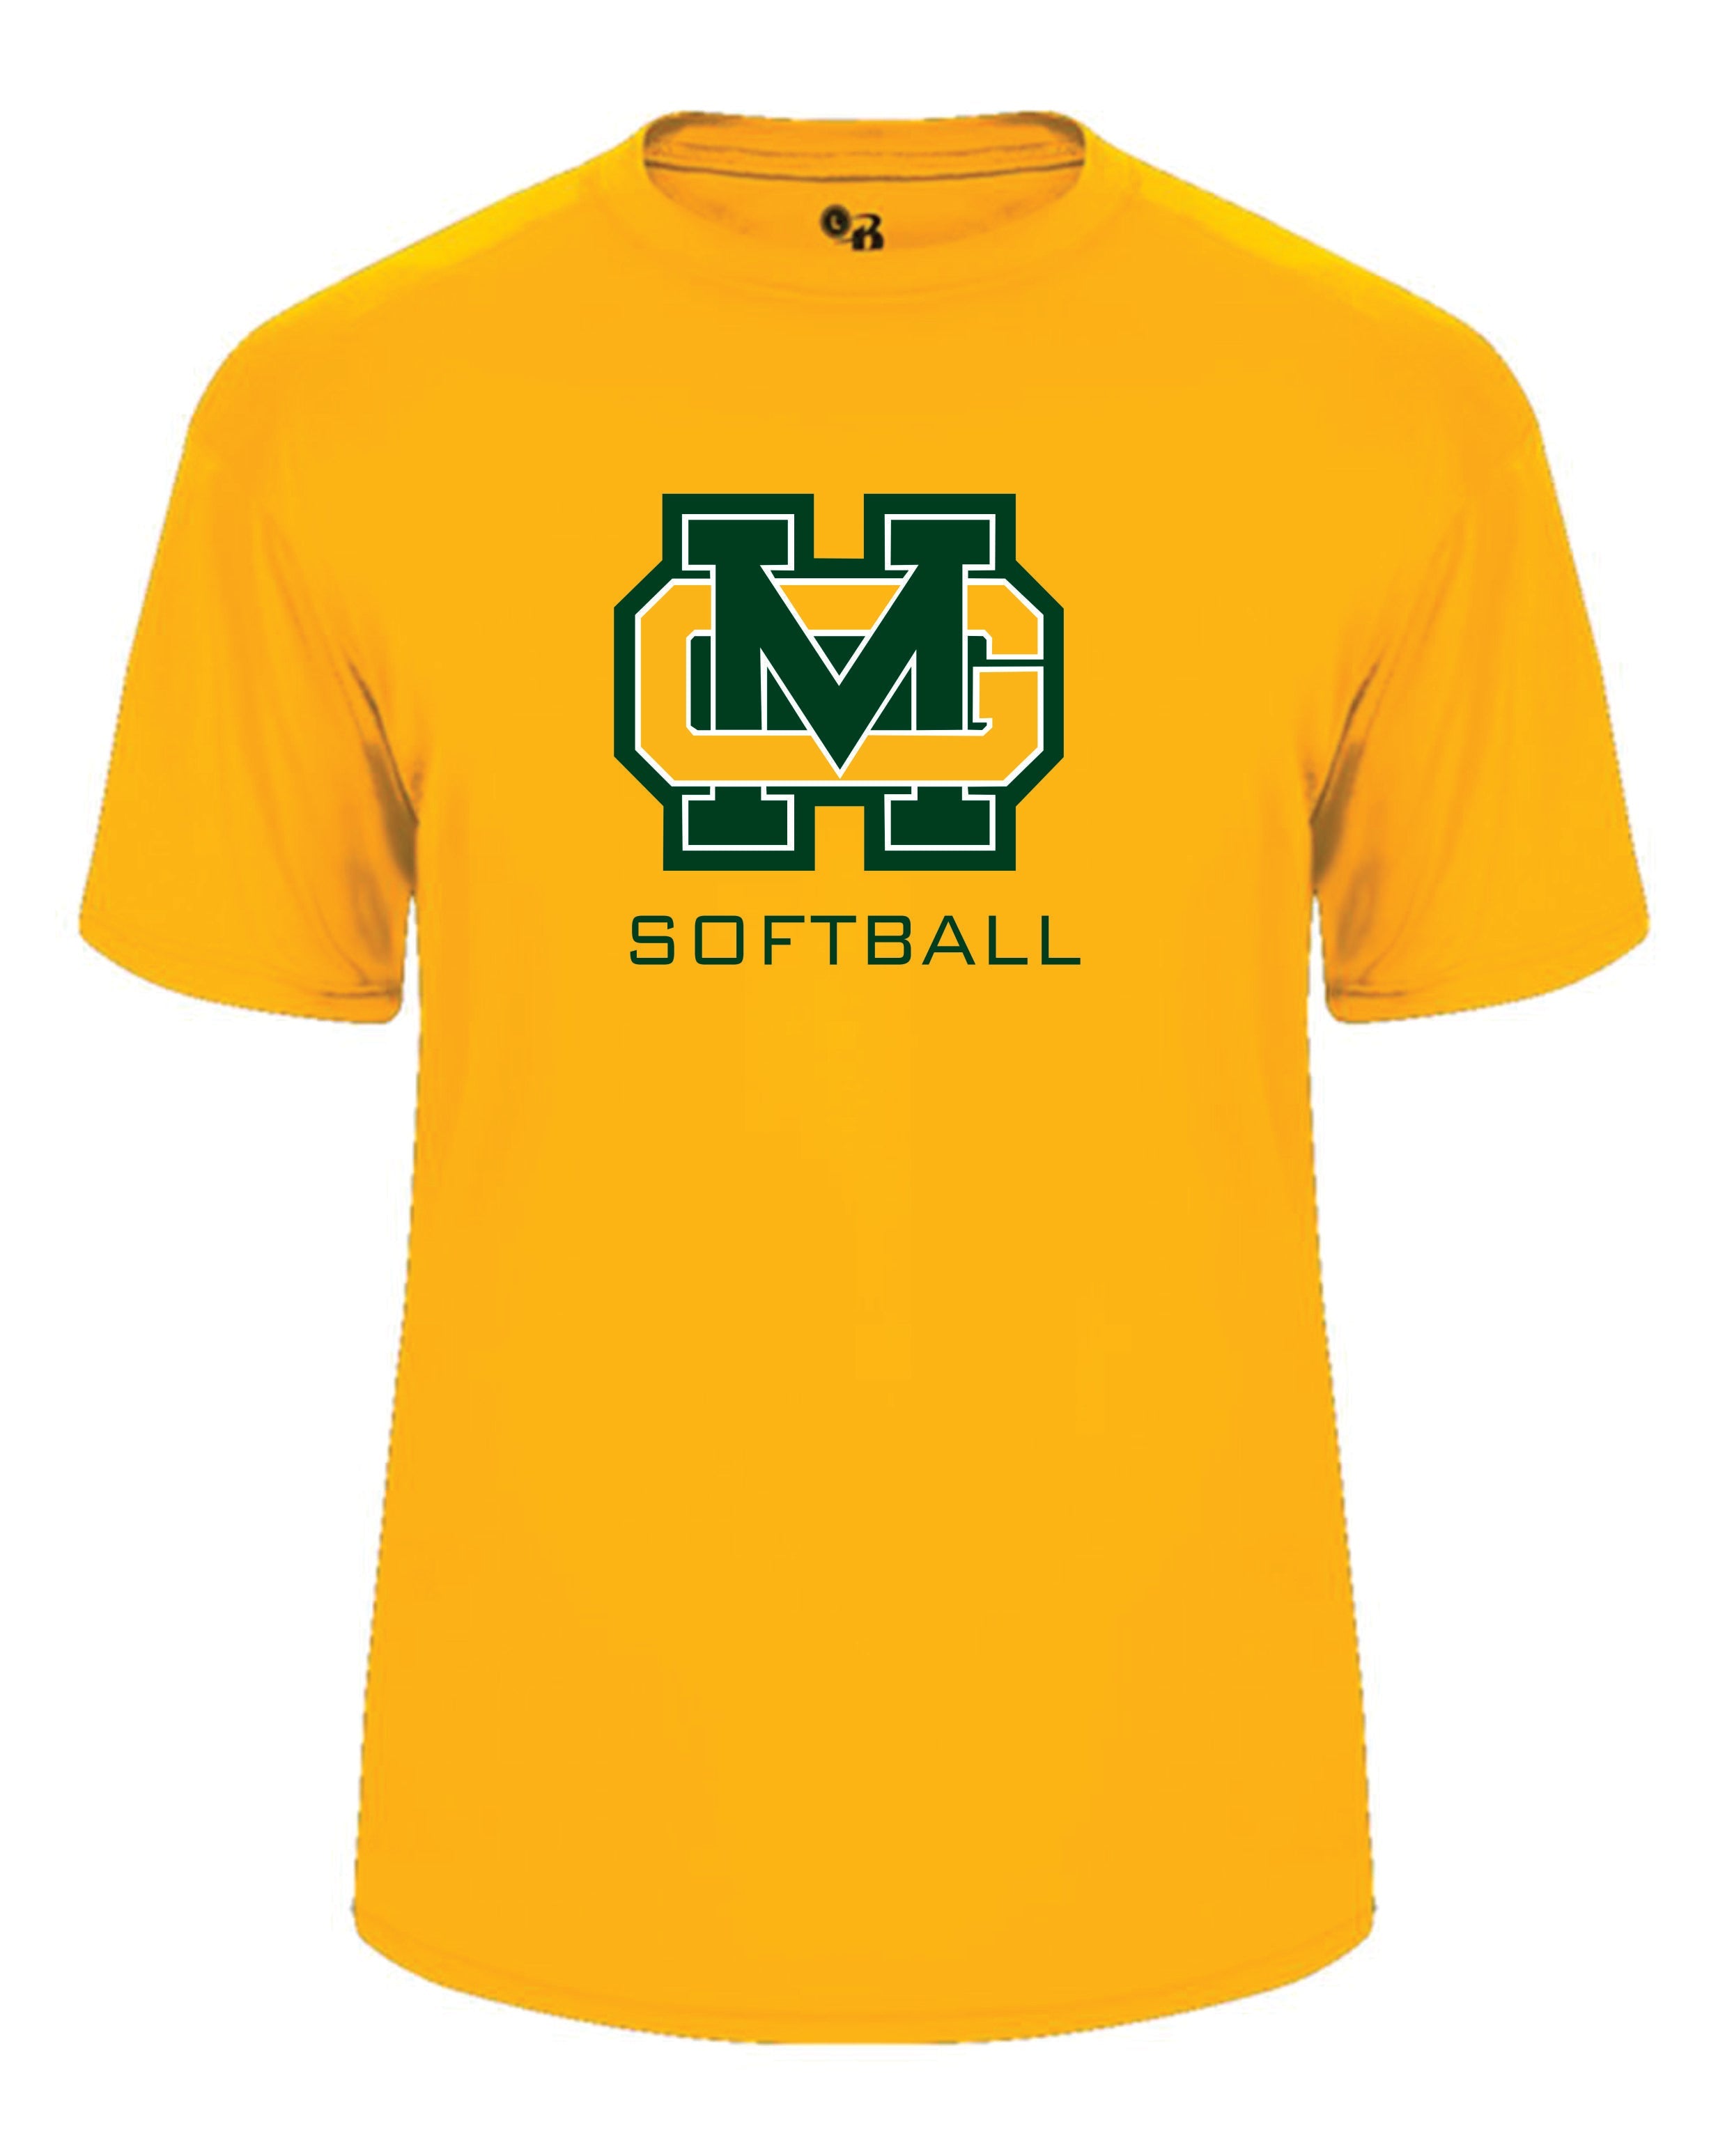 Great Mills Softball Short Sleeve Badger Dri Fit T shirt - WOMEN